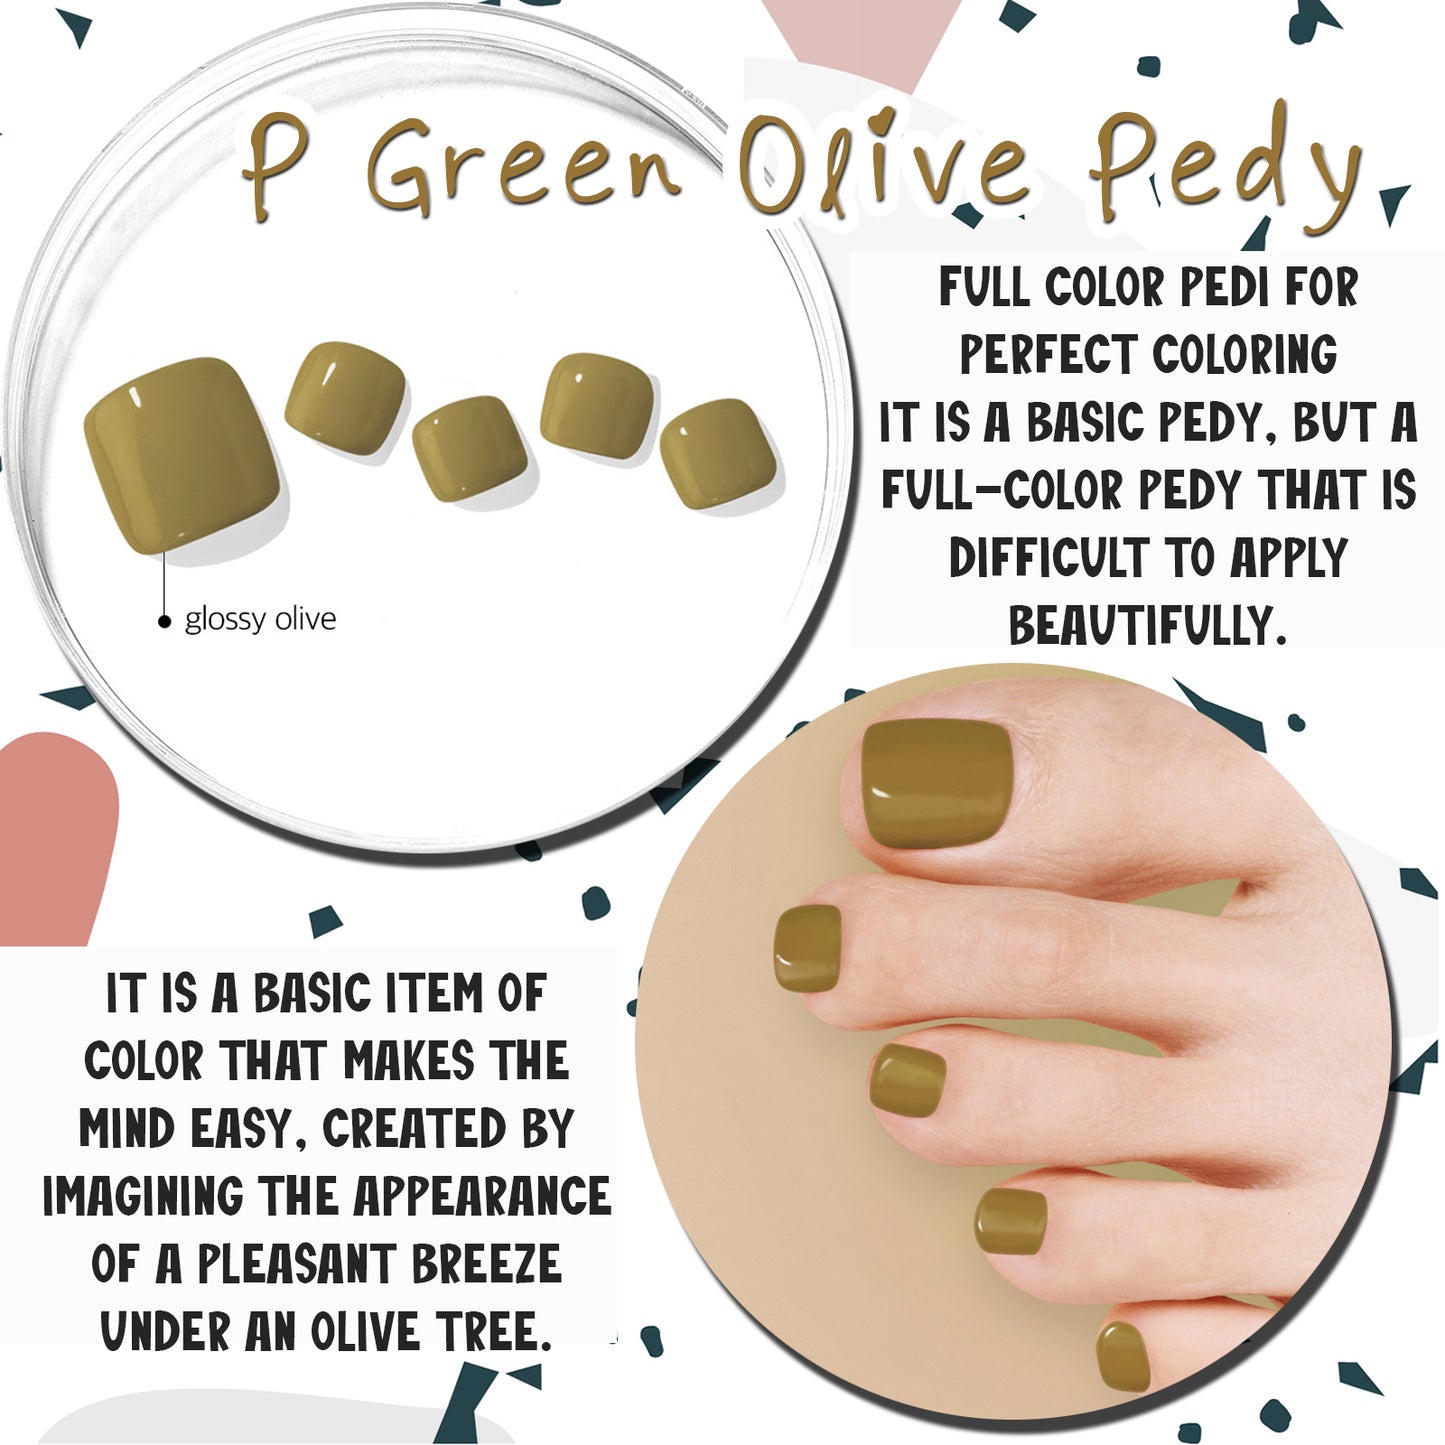 Ohora (P Green Olive Pedy)